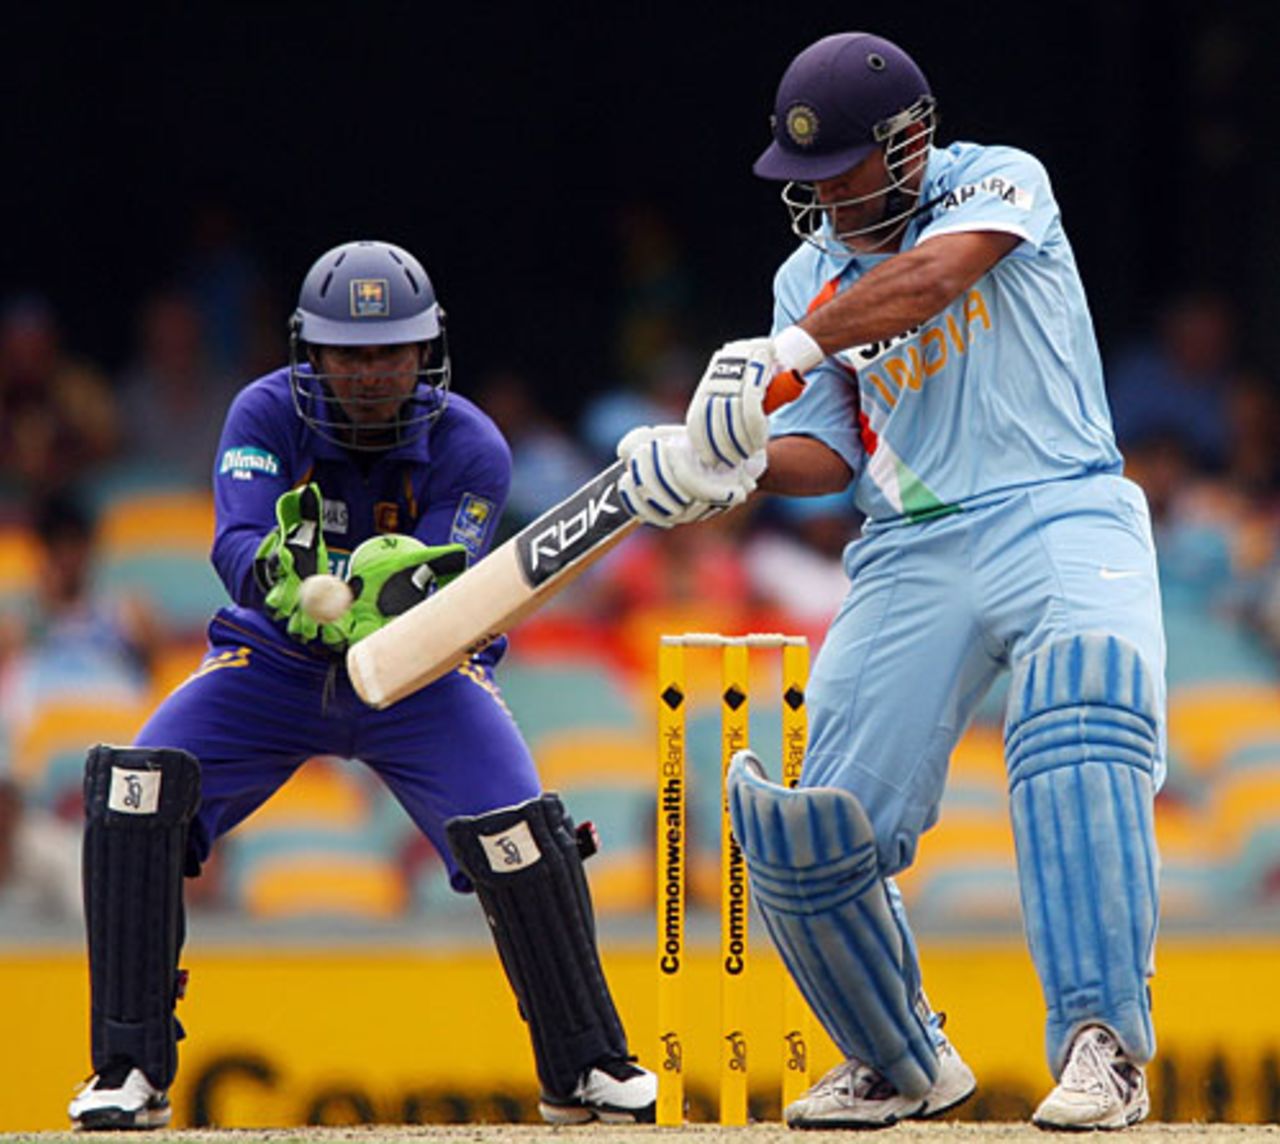 Mahendra Singh Dhoni looks to cut, India v Sri Lanka, CB Series, 2nd ODI, Brisbane, February 5, 2008